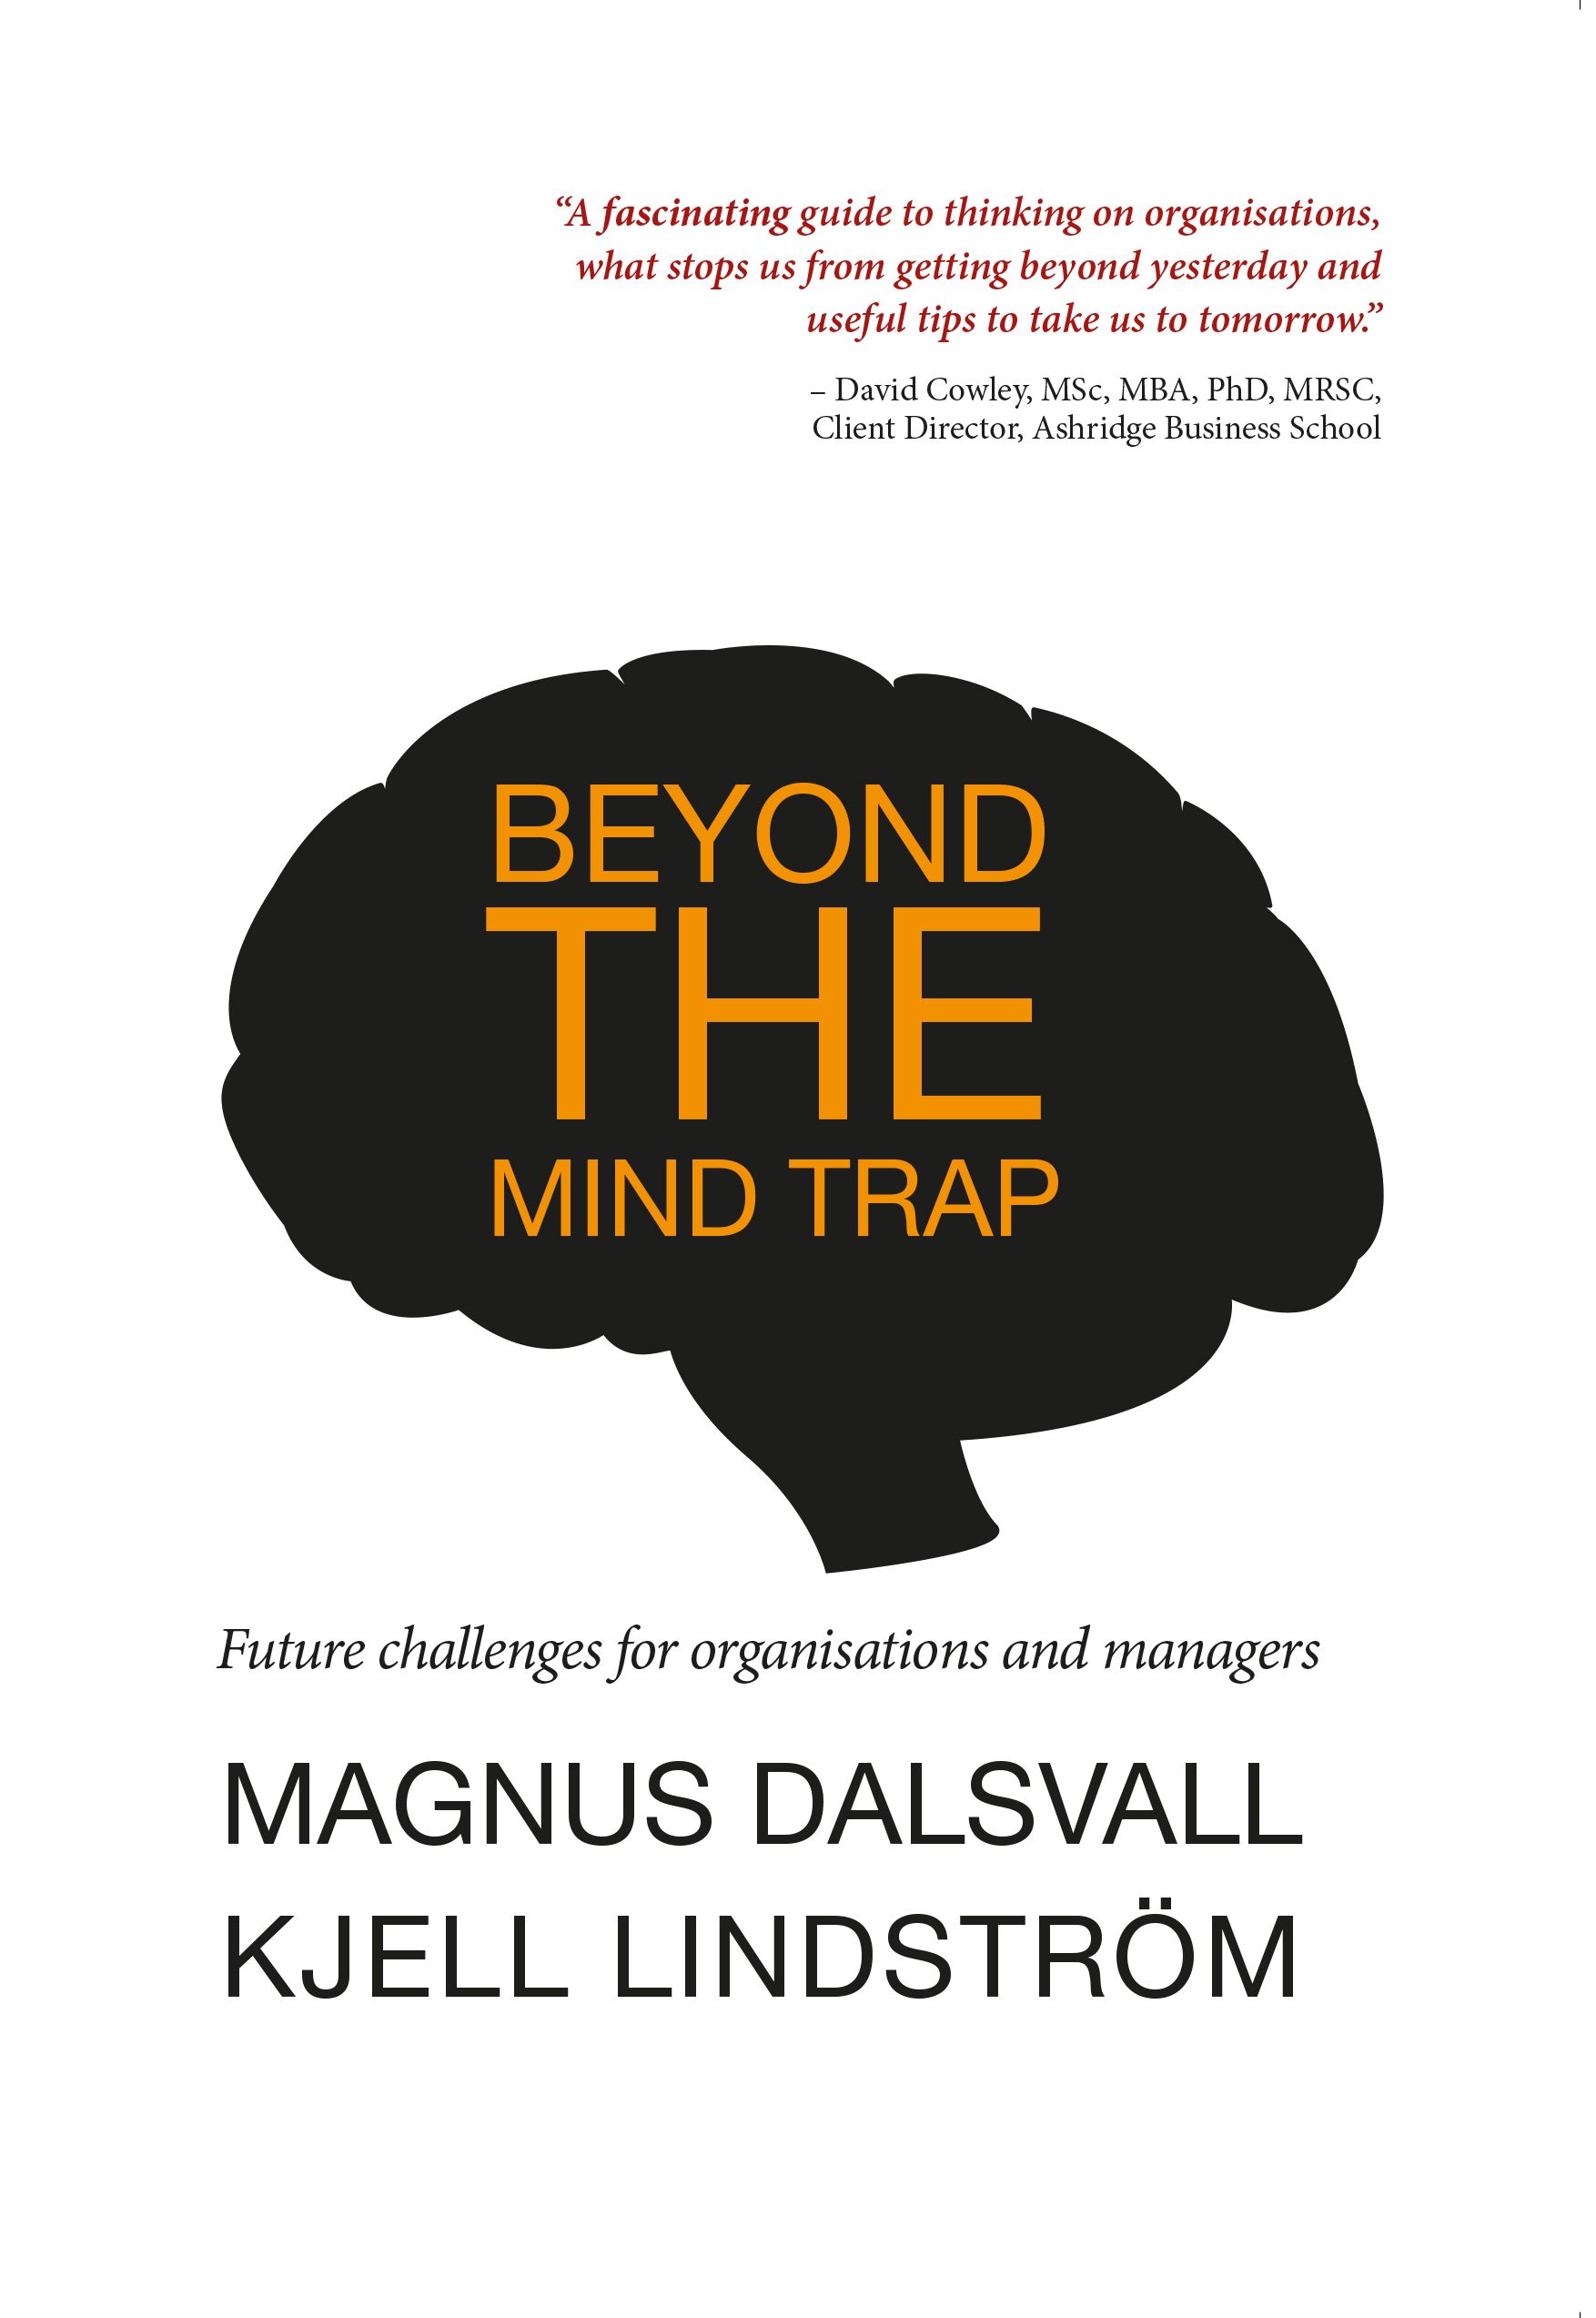 Beyond the mind trap, eBook by Magnus Dalsvall, Kjell Lindström